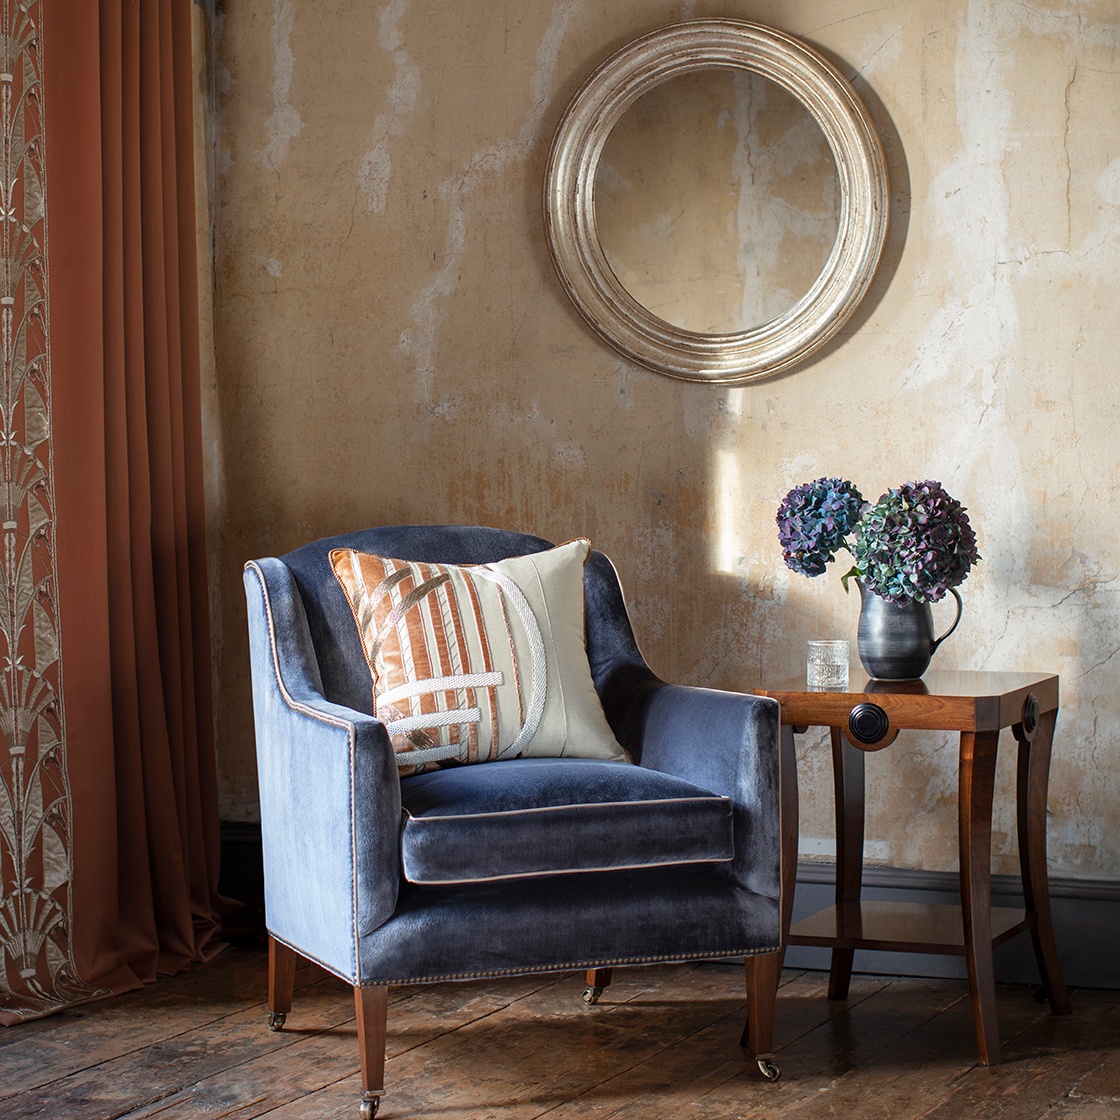 Duke console table with Edgar chair in Capri silk velvet - Charcoal - Beaumont & Fletcher